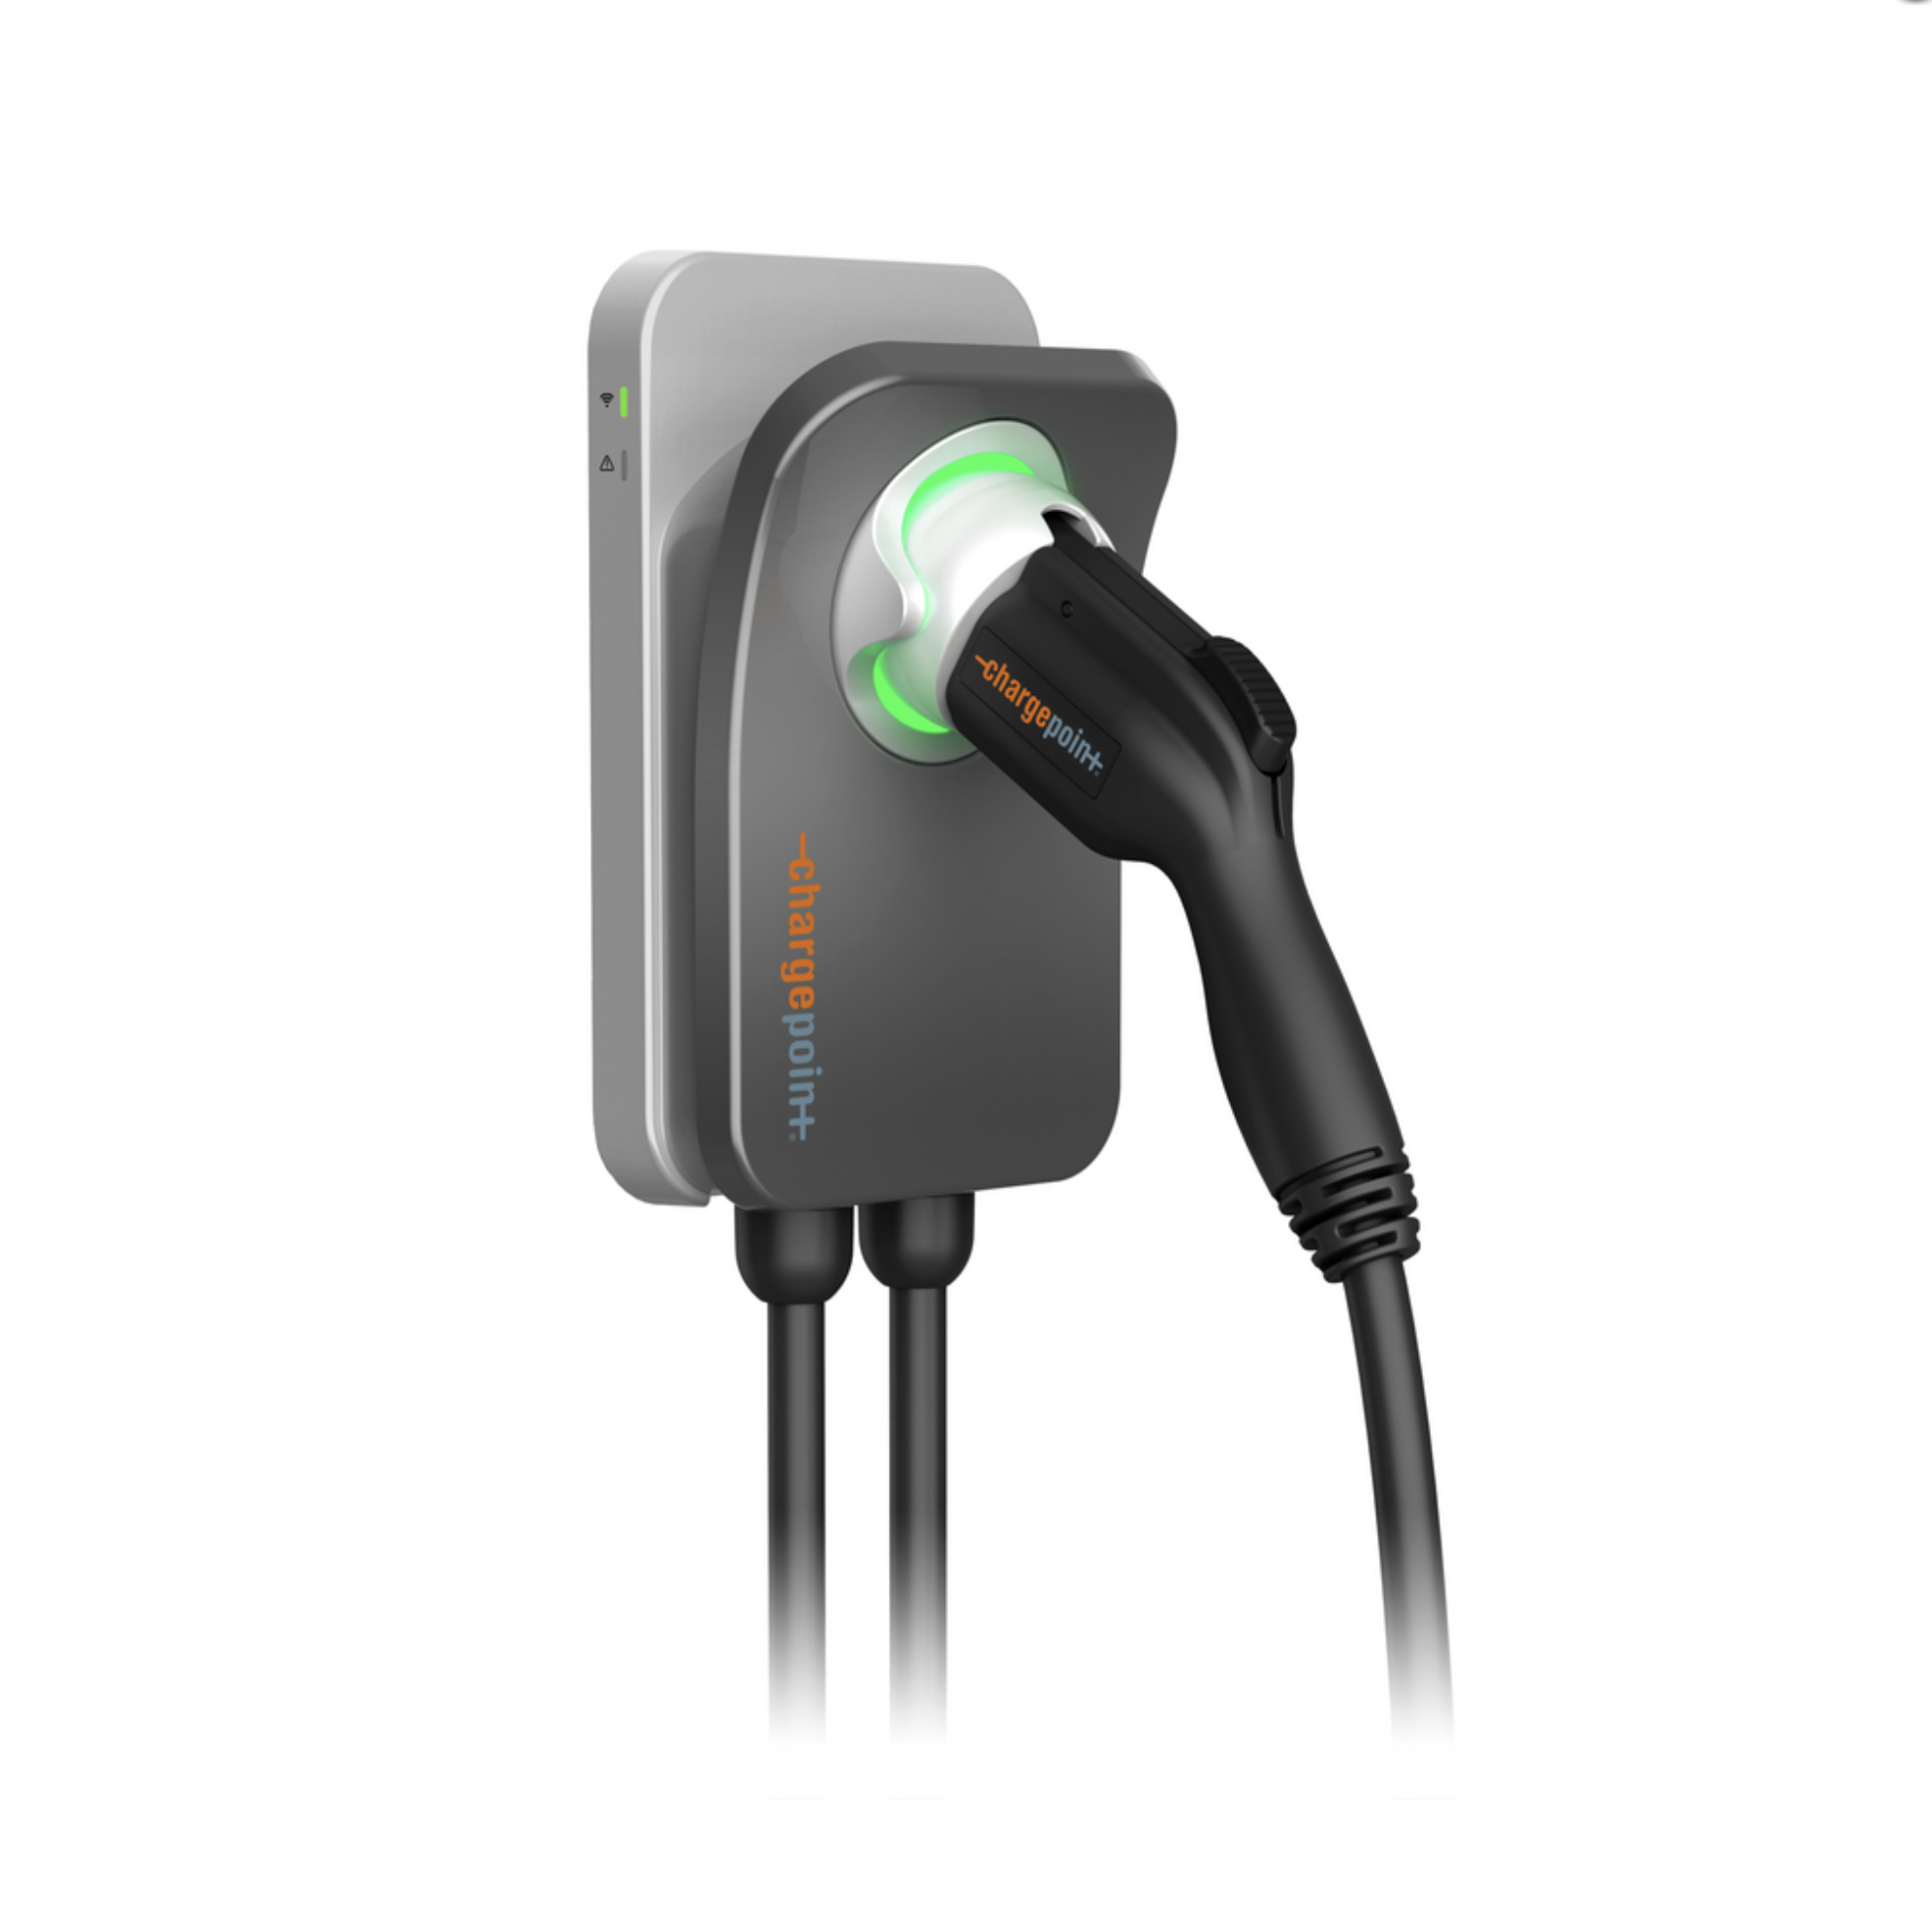 Chargepoint CPH50-NEMA14-50-L23 16A-50A, NEMA 14-50 Plug, 7010.4 mm (23') Charging Cable